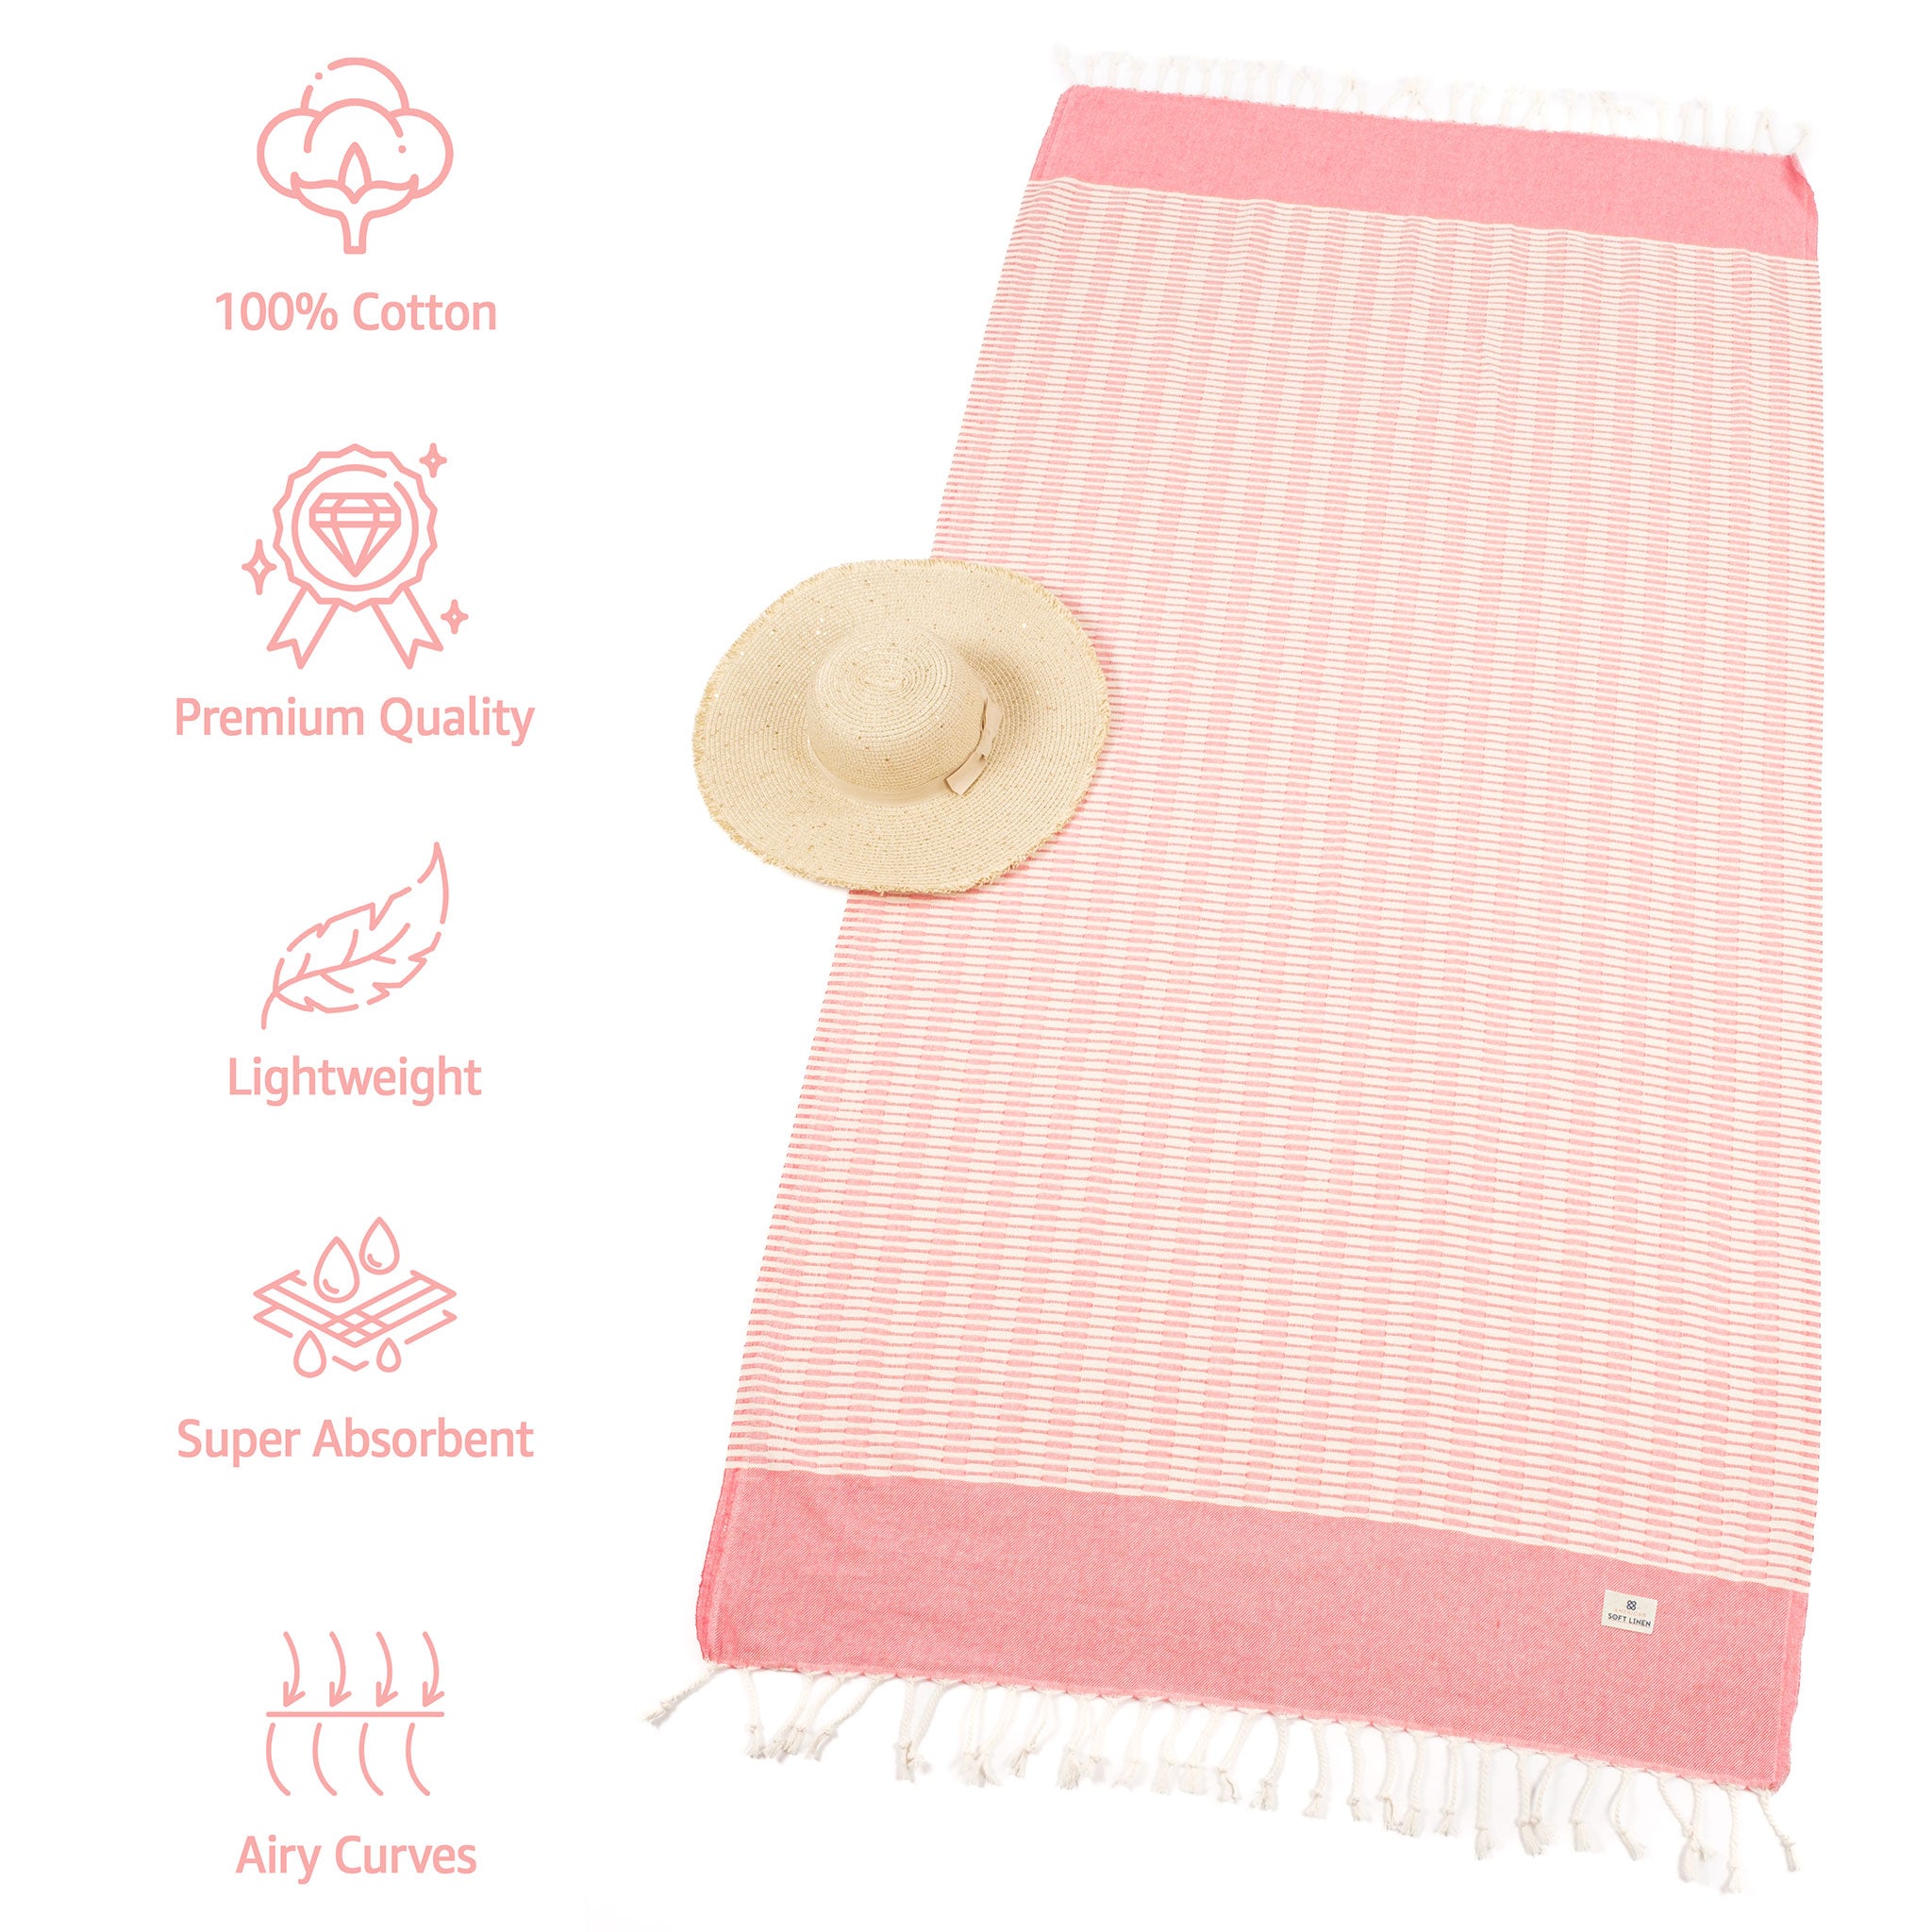 American Soft Linen - 100% Cotton Turkish Peshtemal Towels 40x70 Inches - Coral - 3